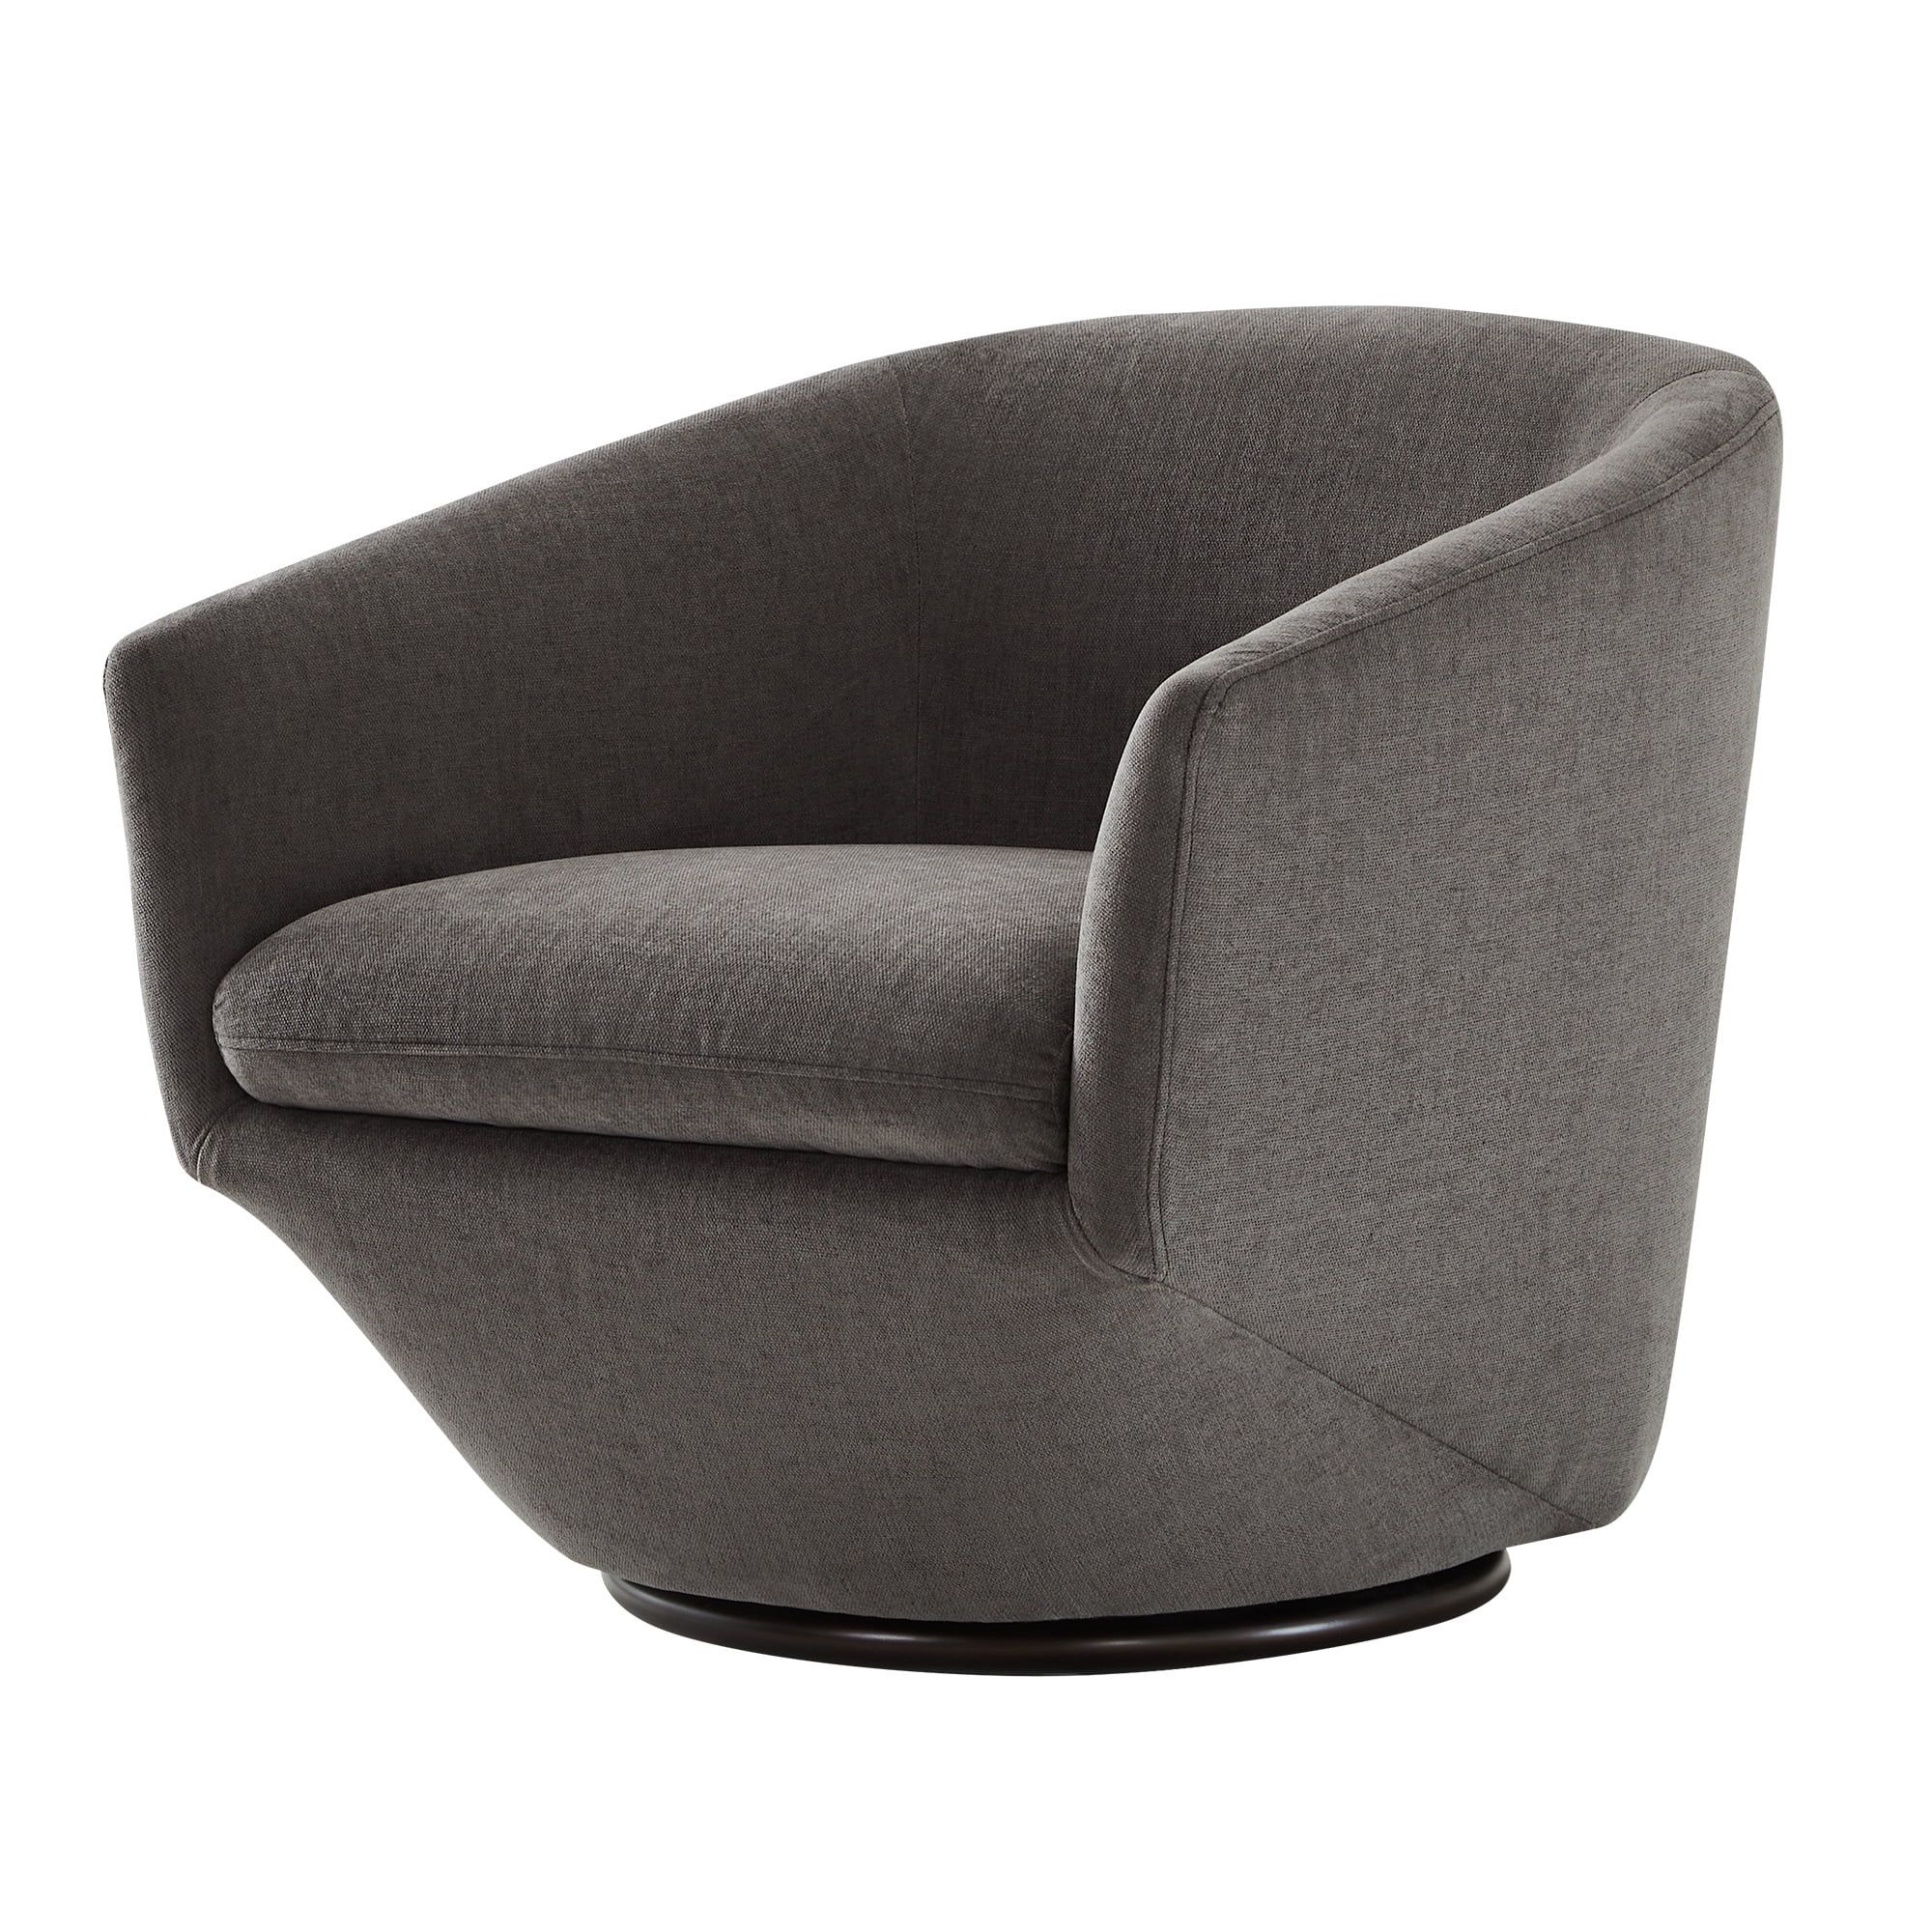 CHITA Swivel Accent Chair Barrel Chair, Fabric in Dark Gray | Walmart (US)